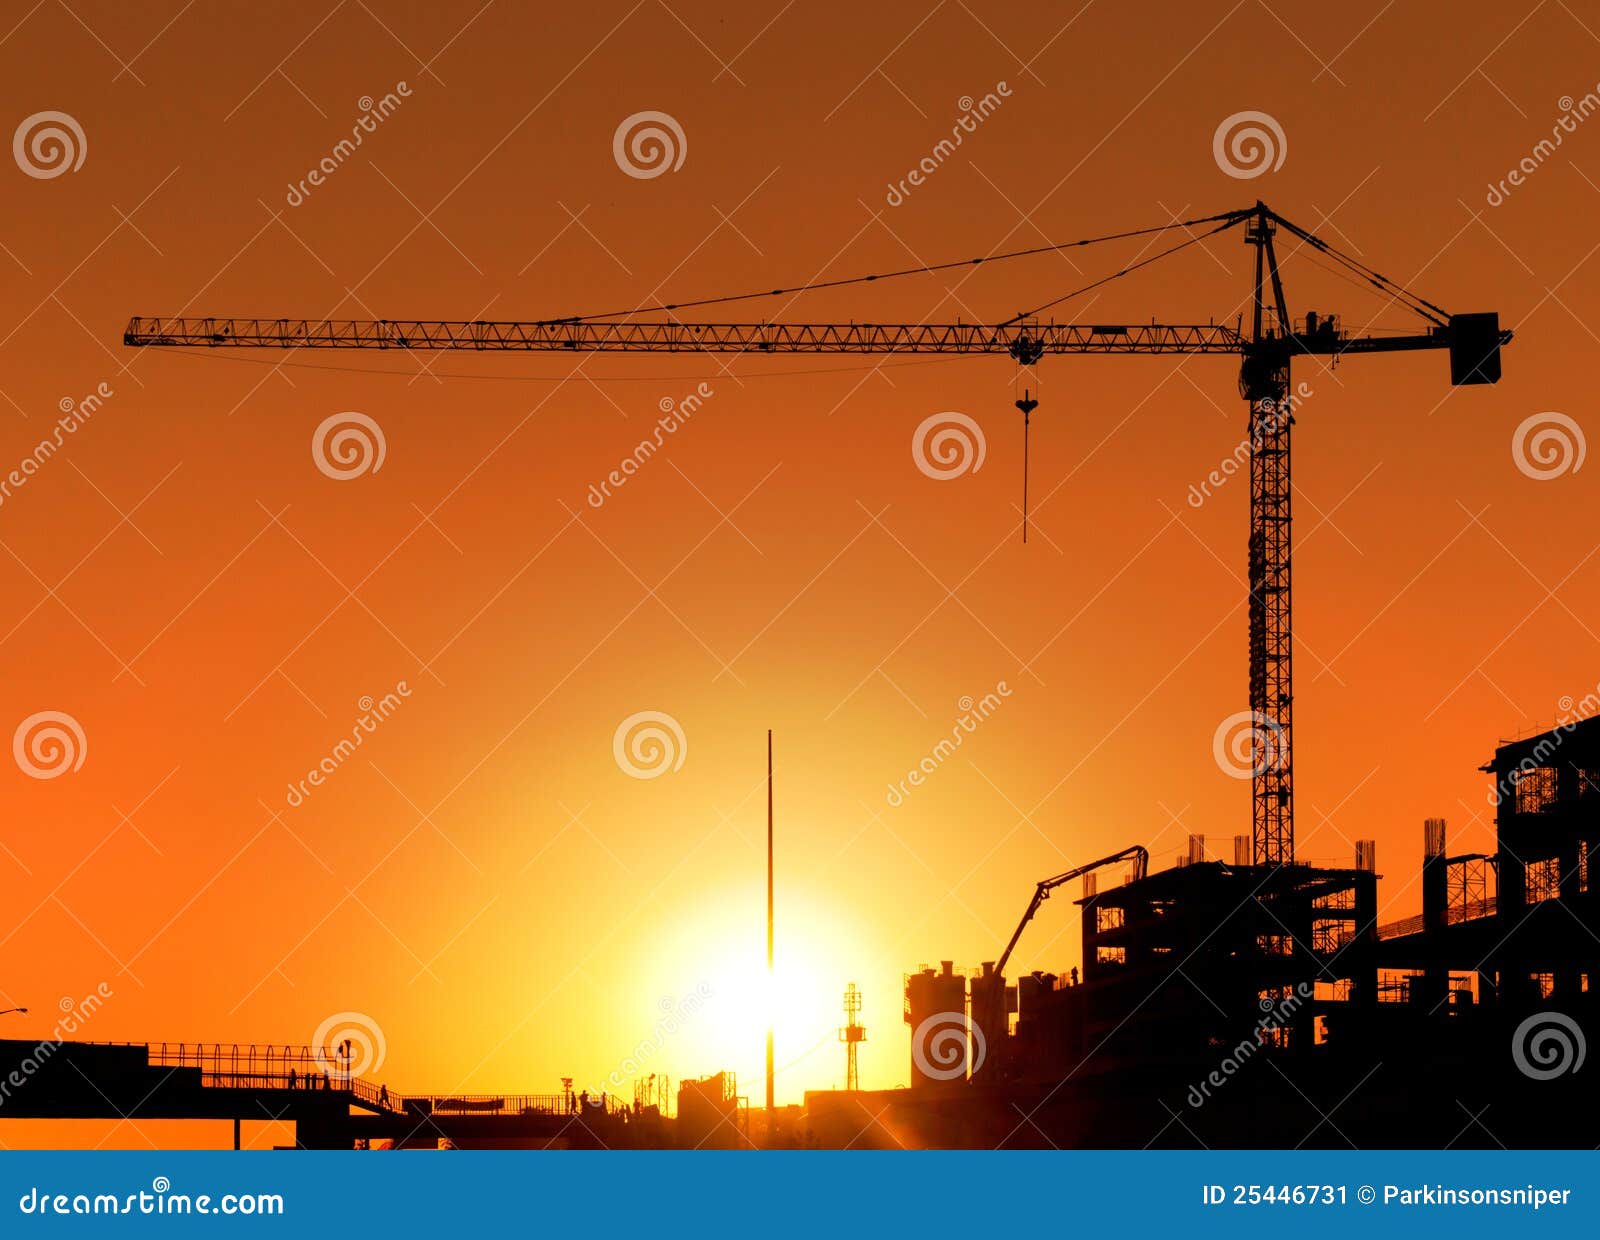 construction site and crane